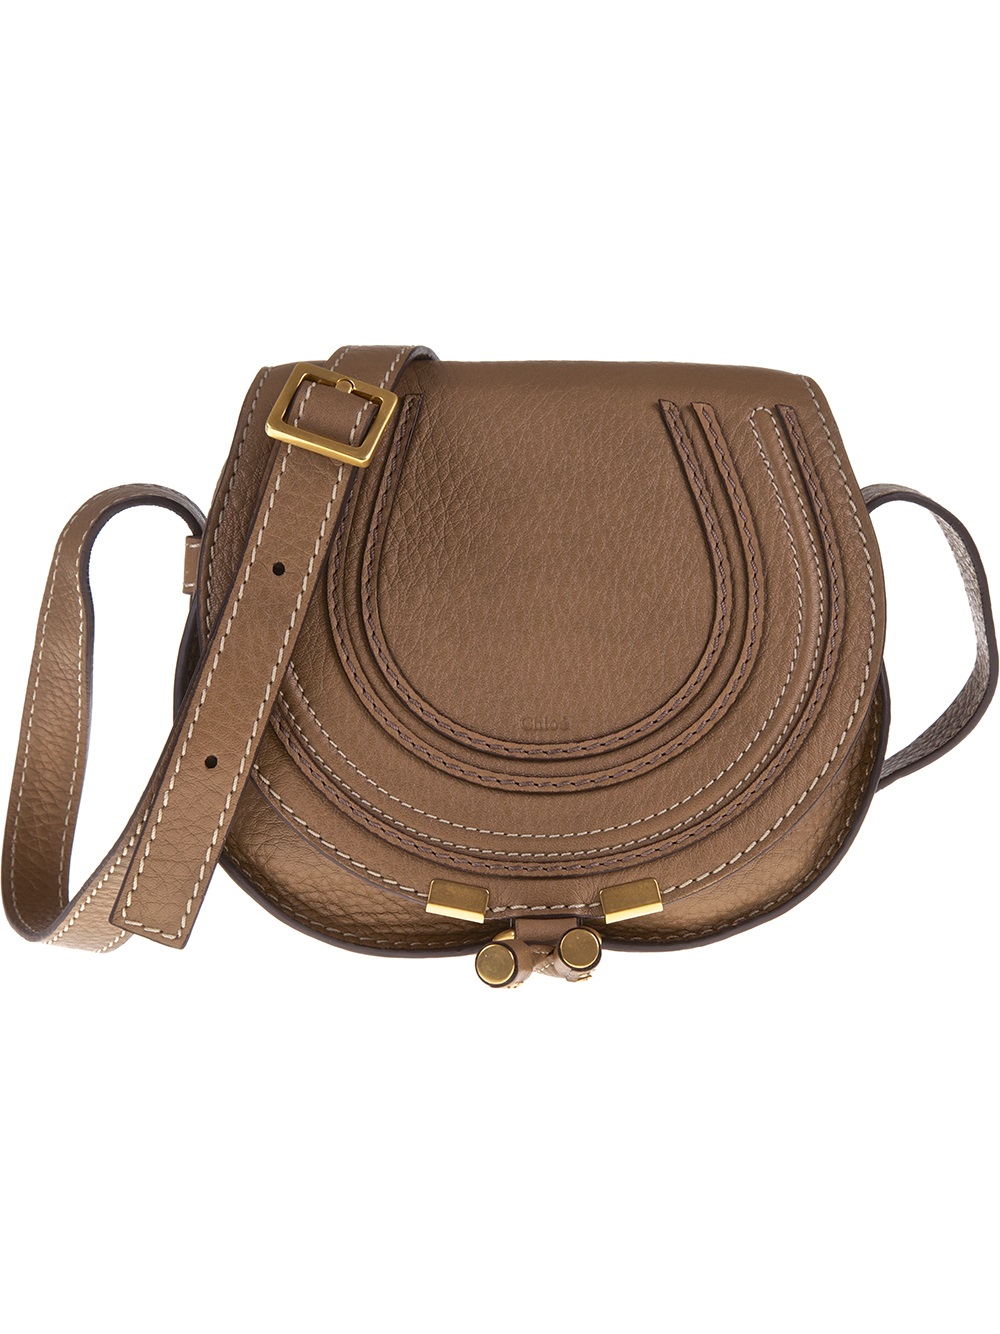 Lyst - Chloé Marcie Saddle Bag in Brown